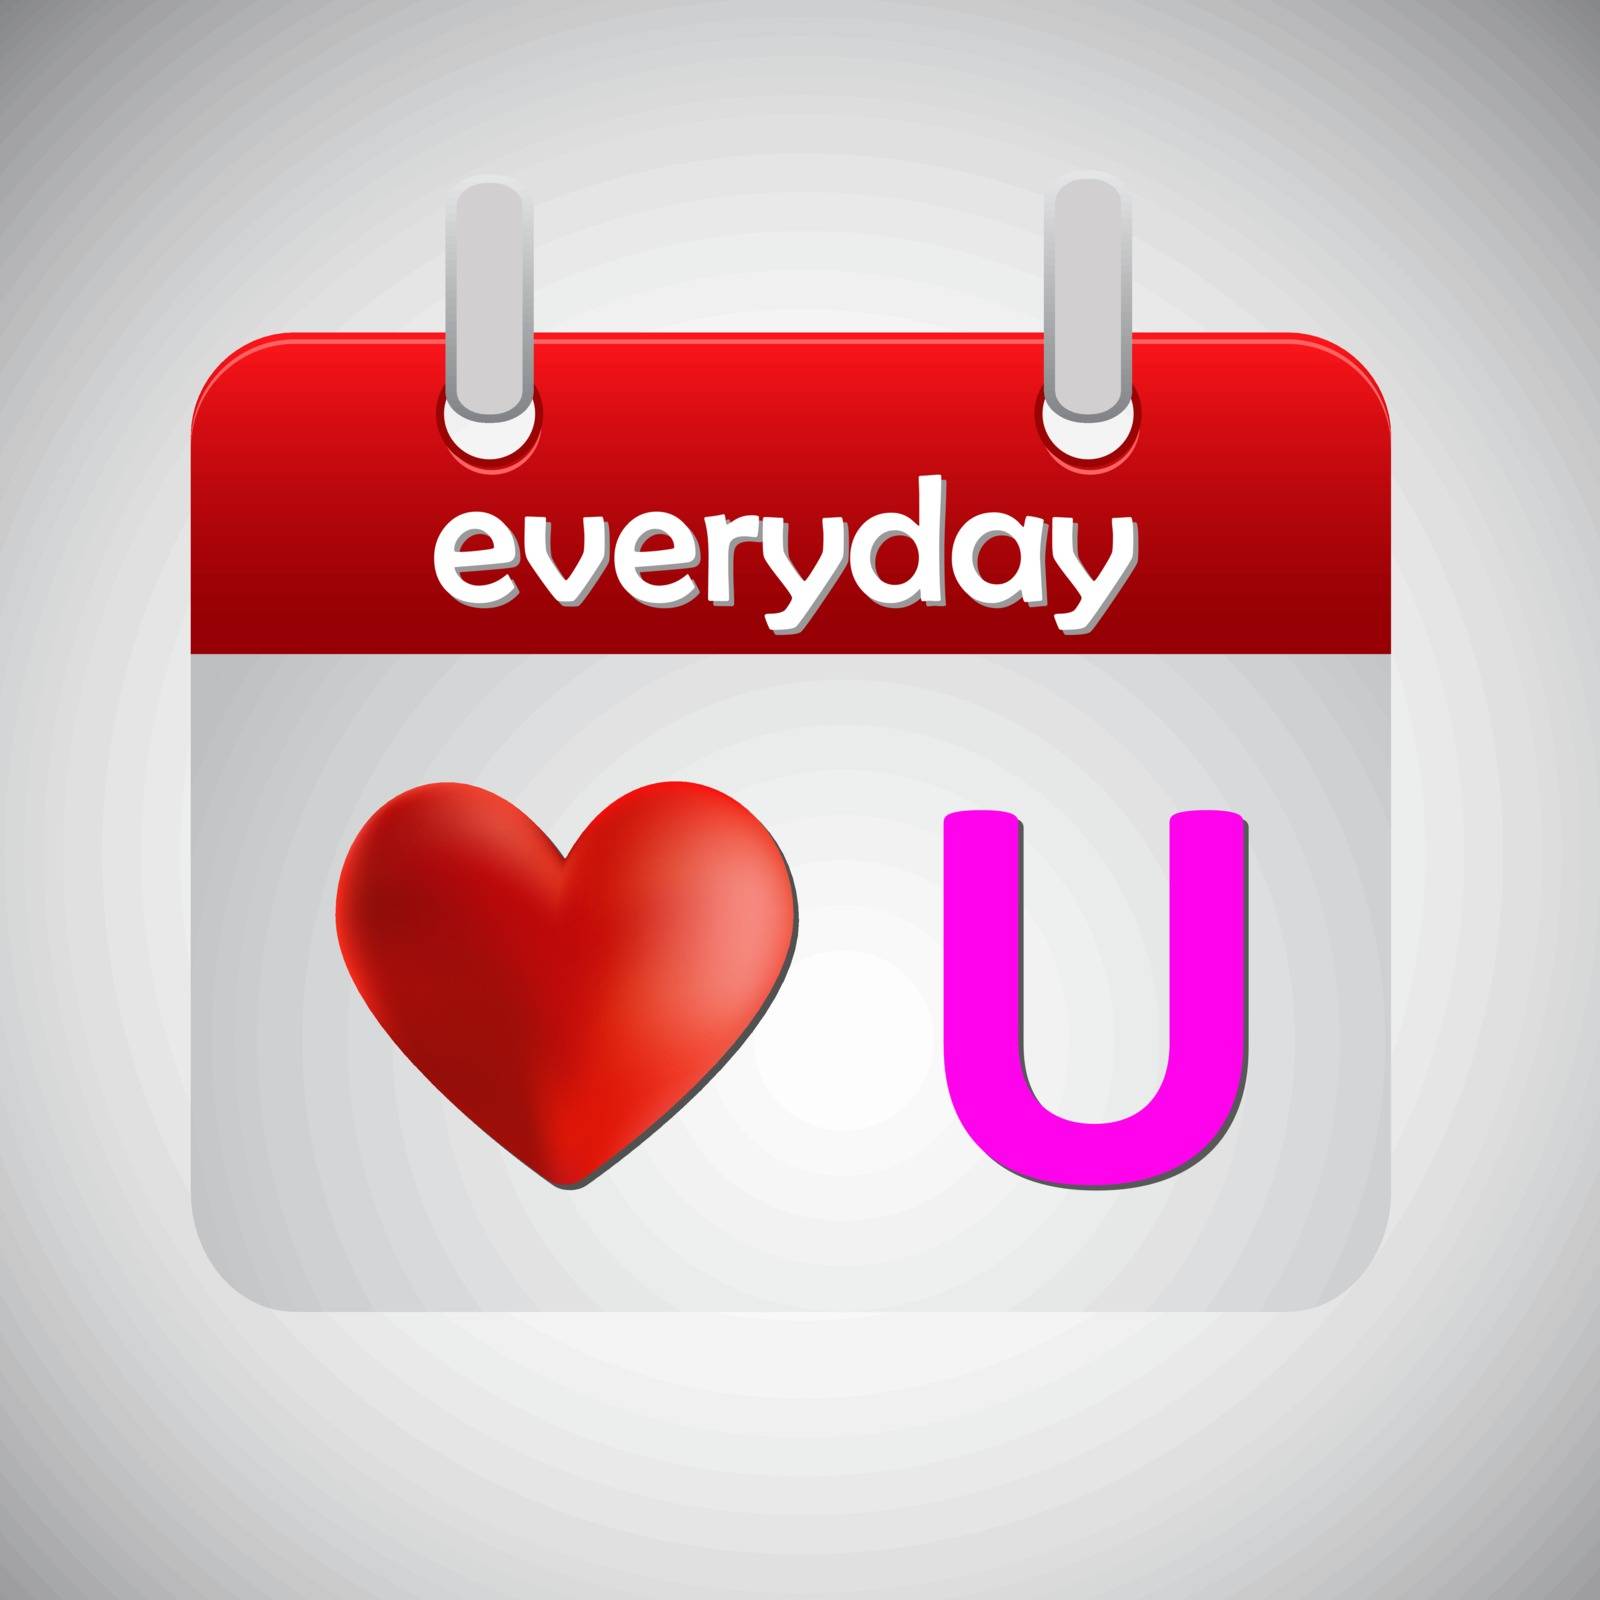 Love you everyday calendar icon, by punsayaporn